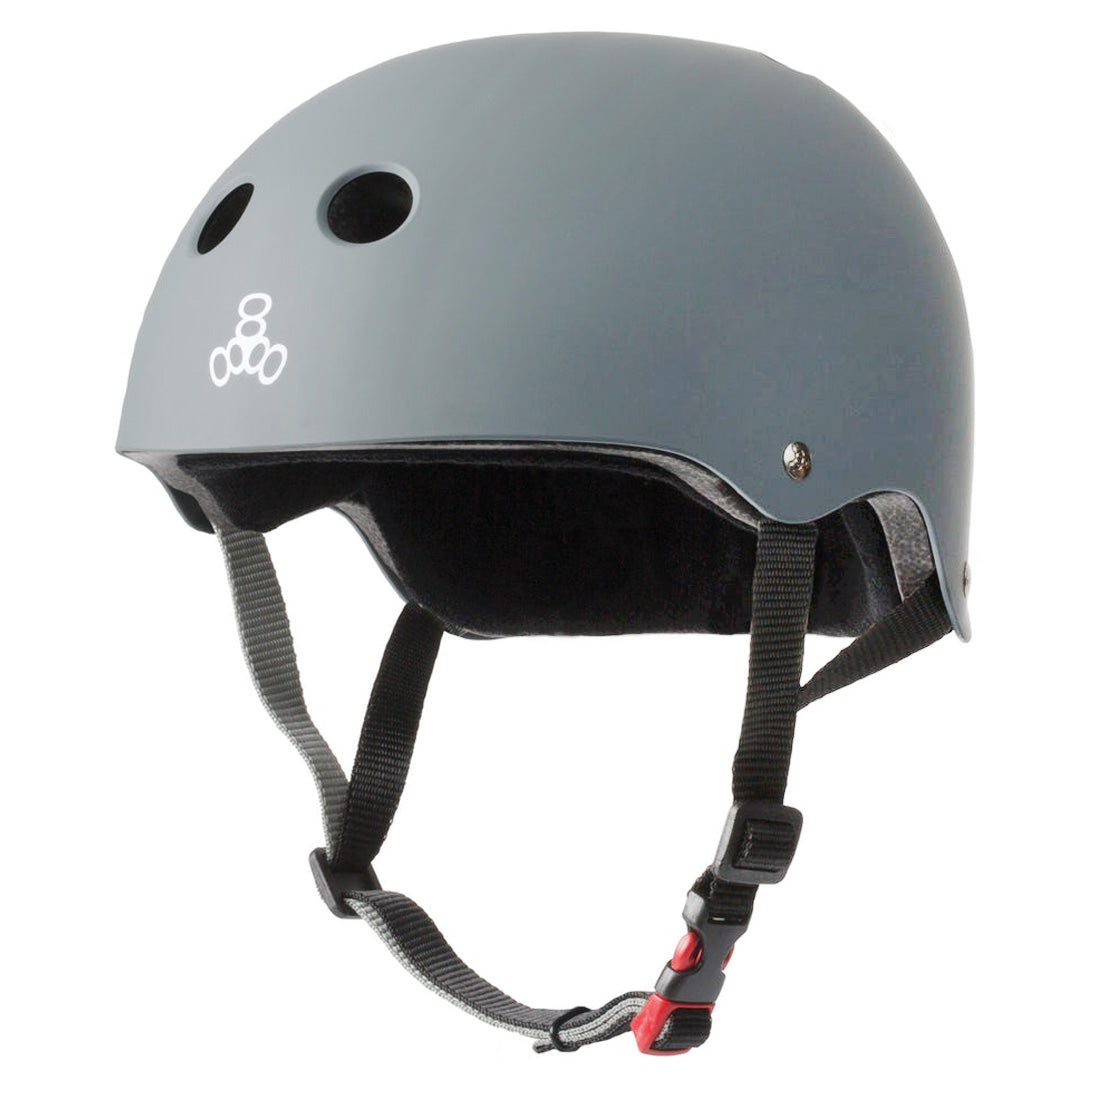 Triple 8 THE Cert SS Helmet - Carbon Rubber Helmets